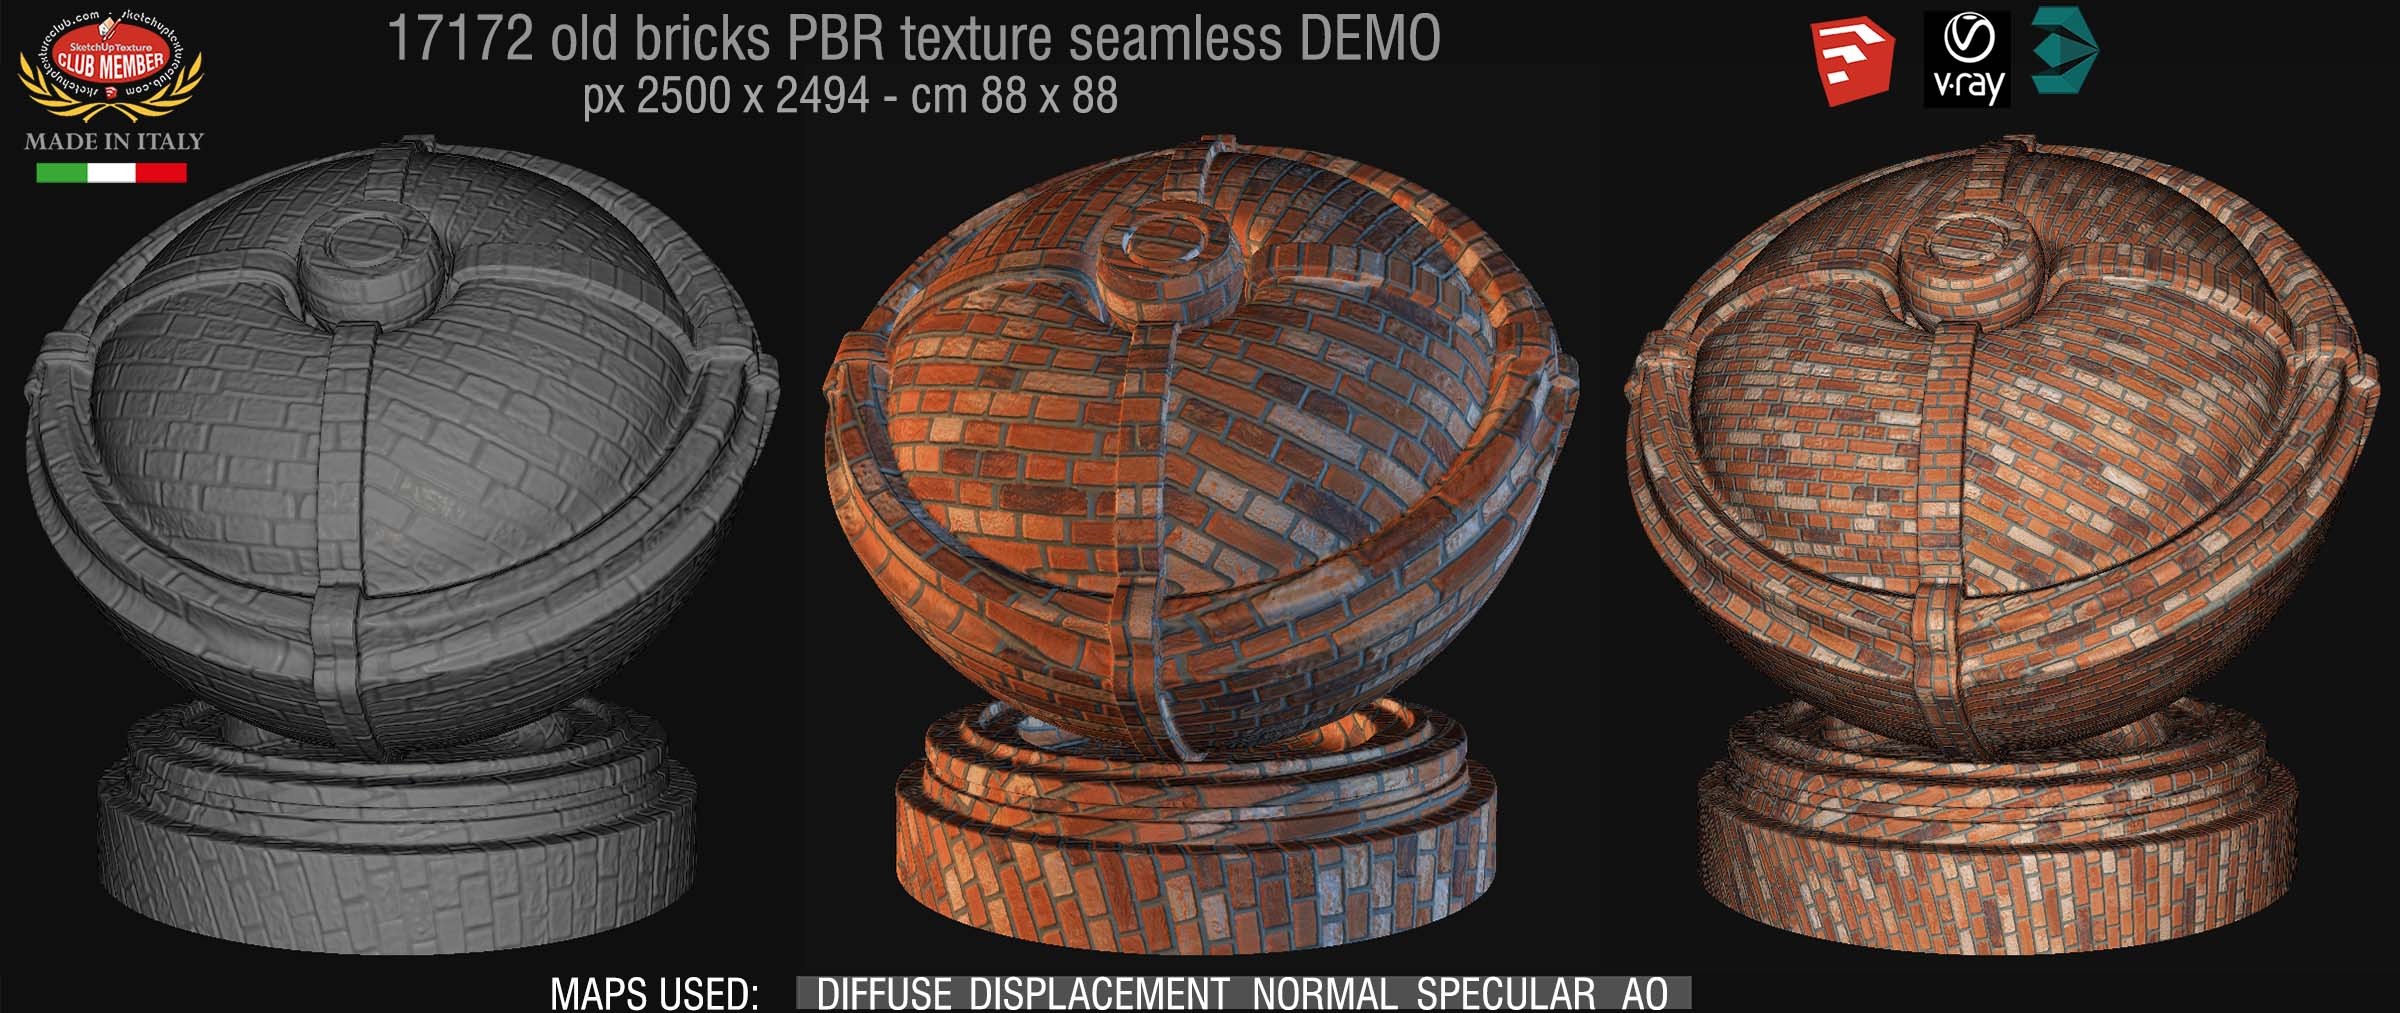 17172 Old bricks PBR texture seamless DEMO